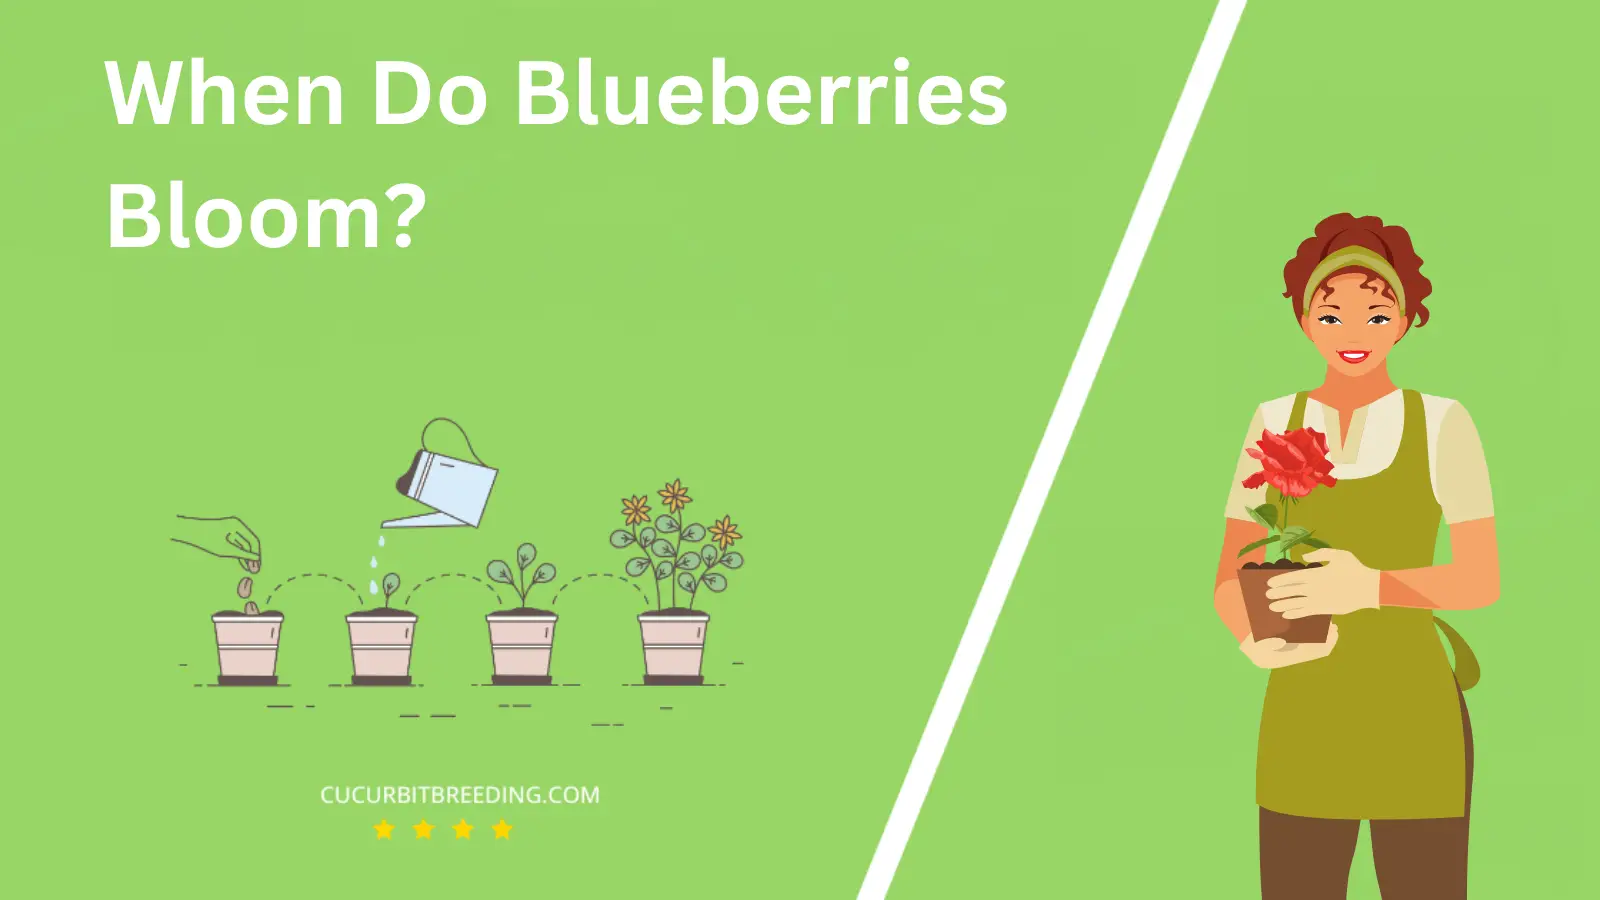 When Do Blueberries Bloom?